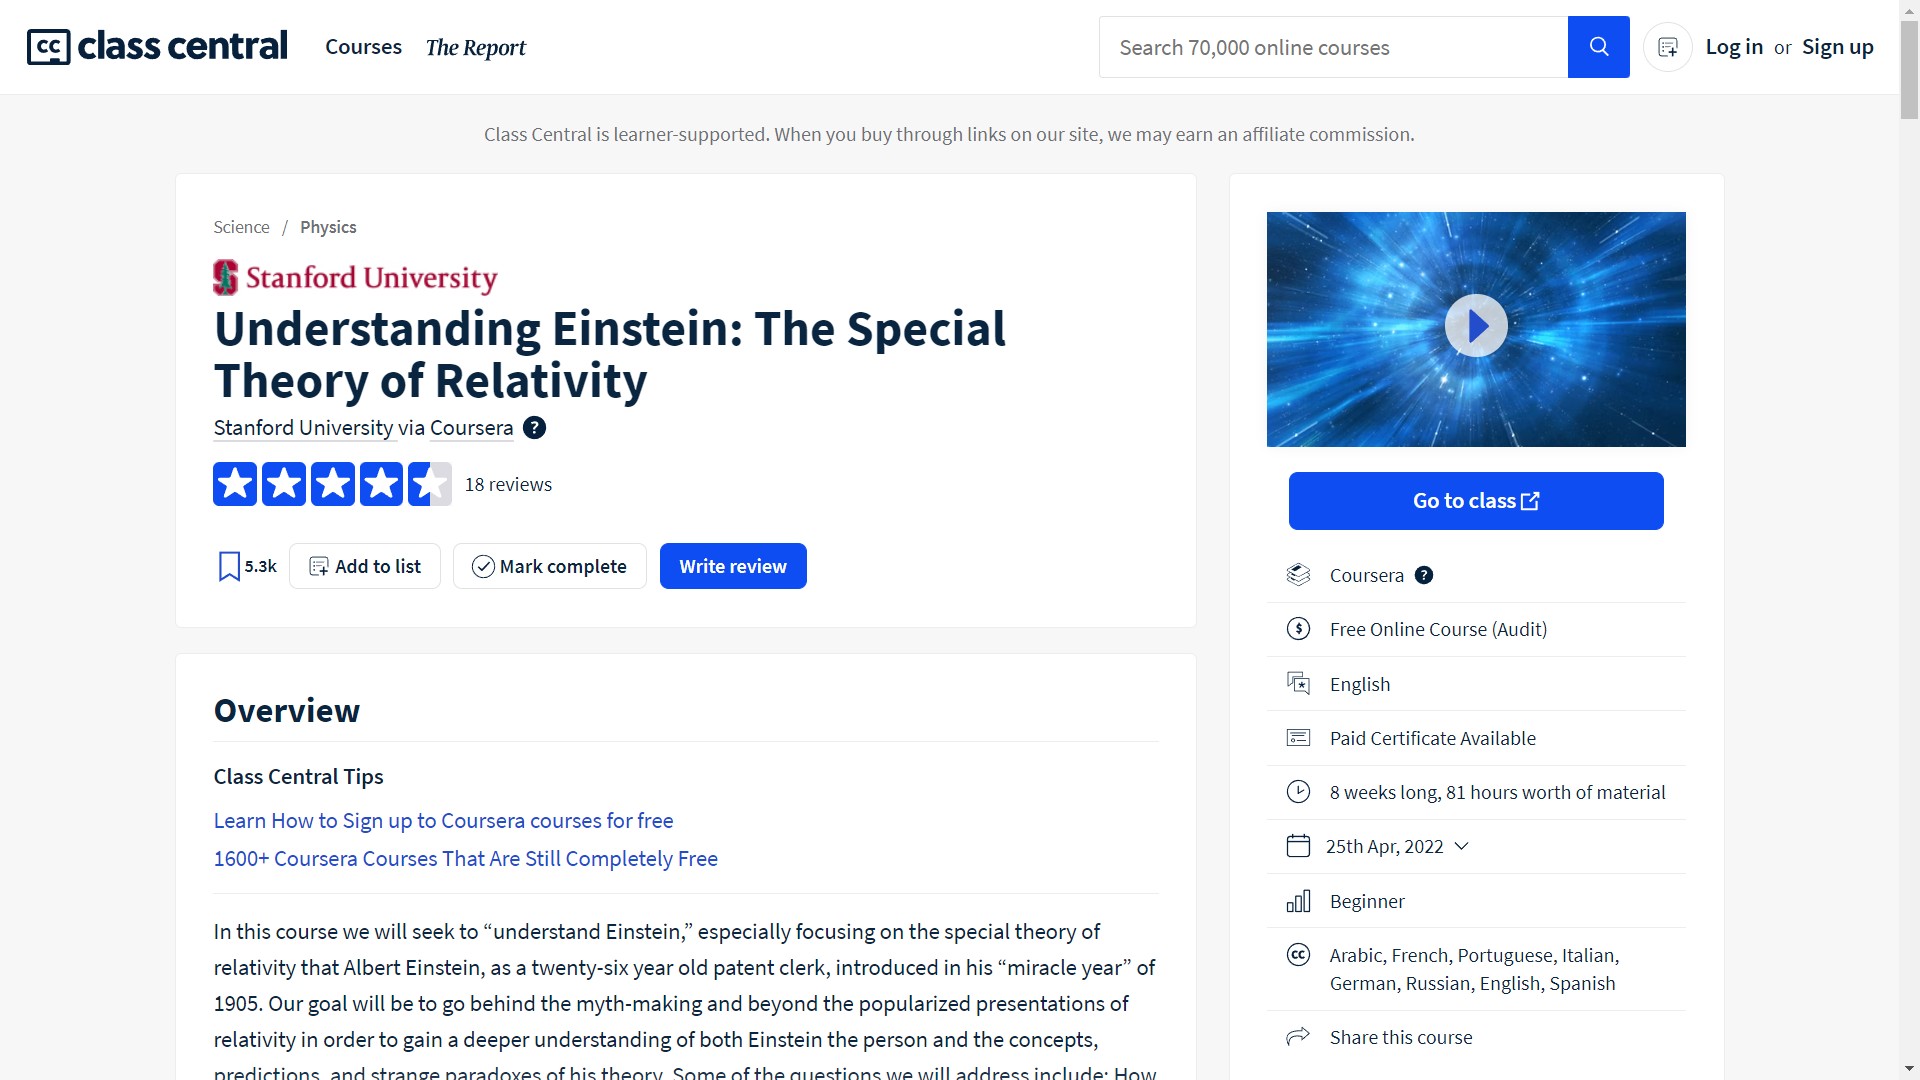 Understanding Einstein The Special Theory of Relativity. Stanford University via Coursera.